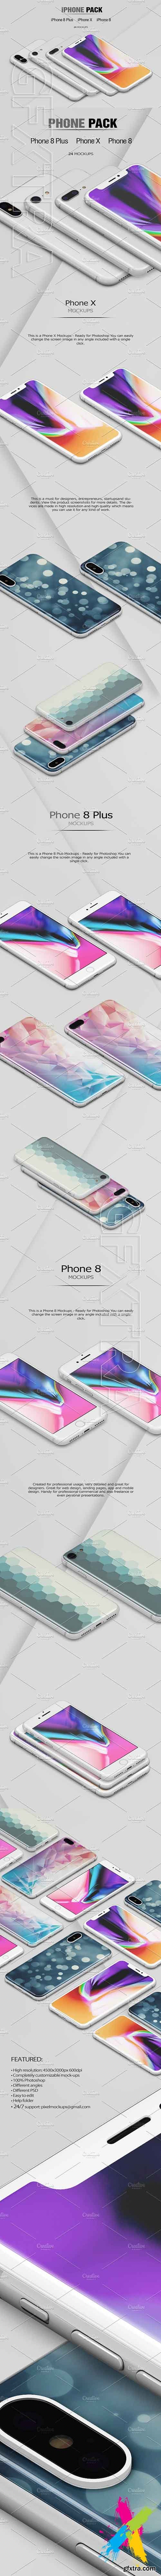 CreativeMarket - Apple iPhones 2017 Pack Mockup 1917154